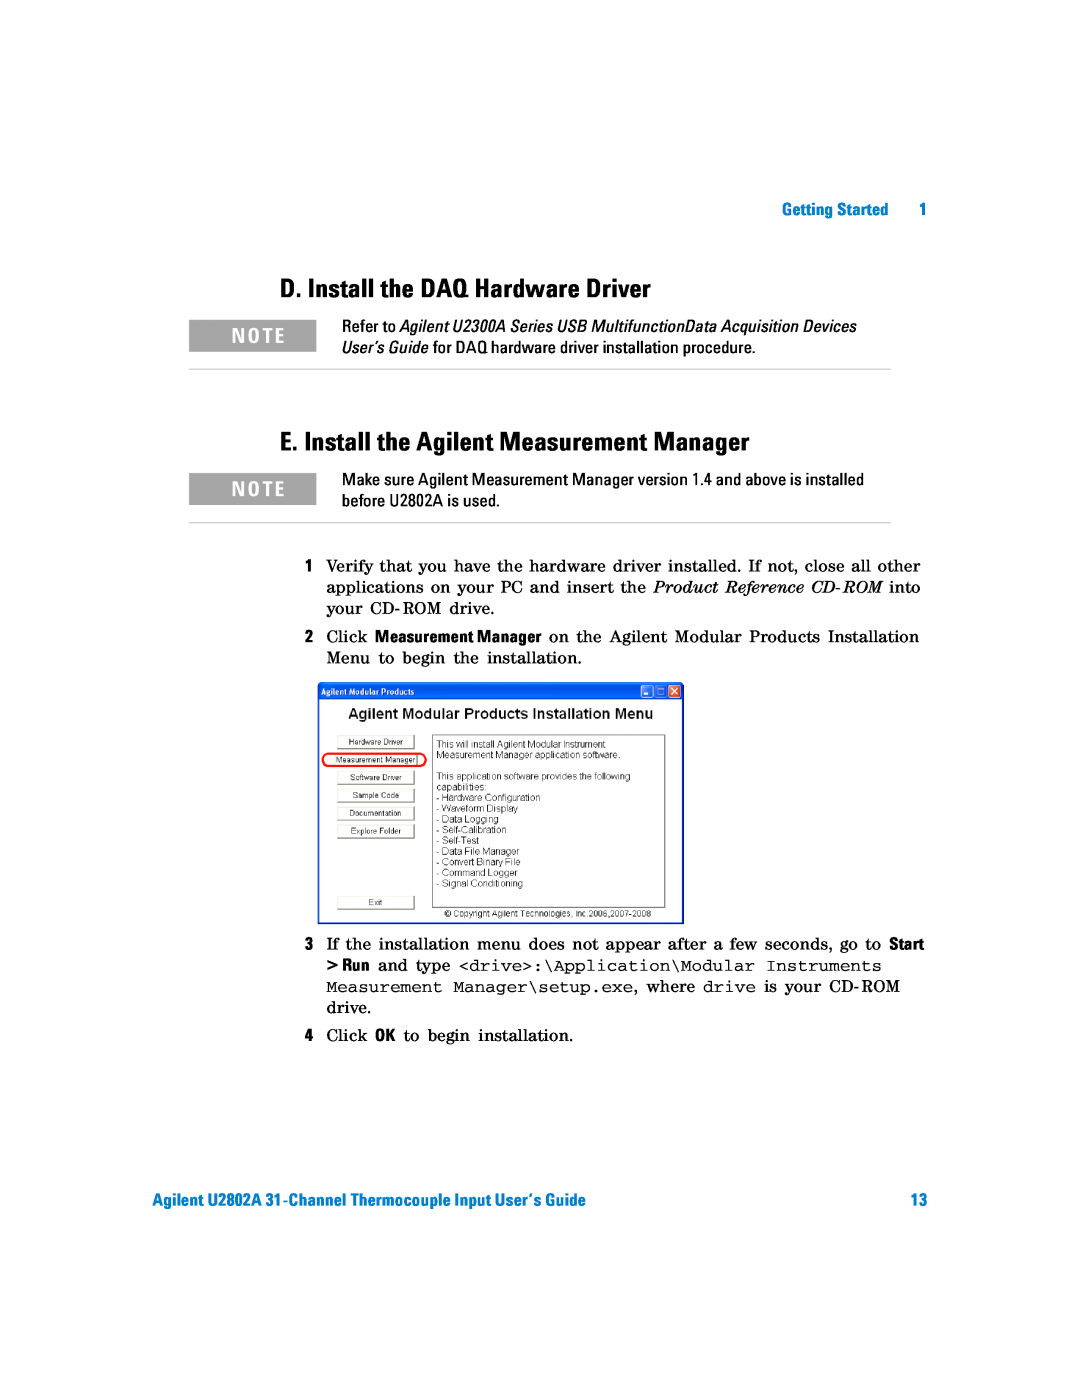 Agilent Technologies U2802A manual D. Install the DAQ Hardware Driver, E. Install the Agilent Measurement Manager, N O Te 